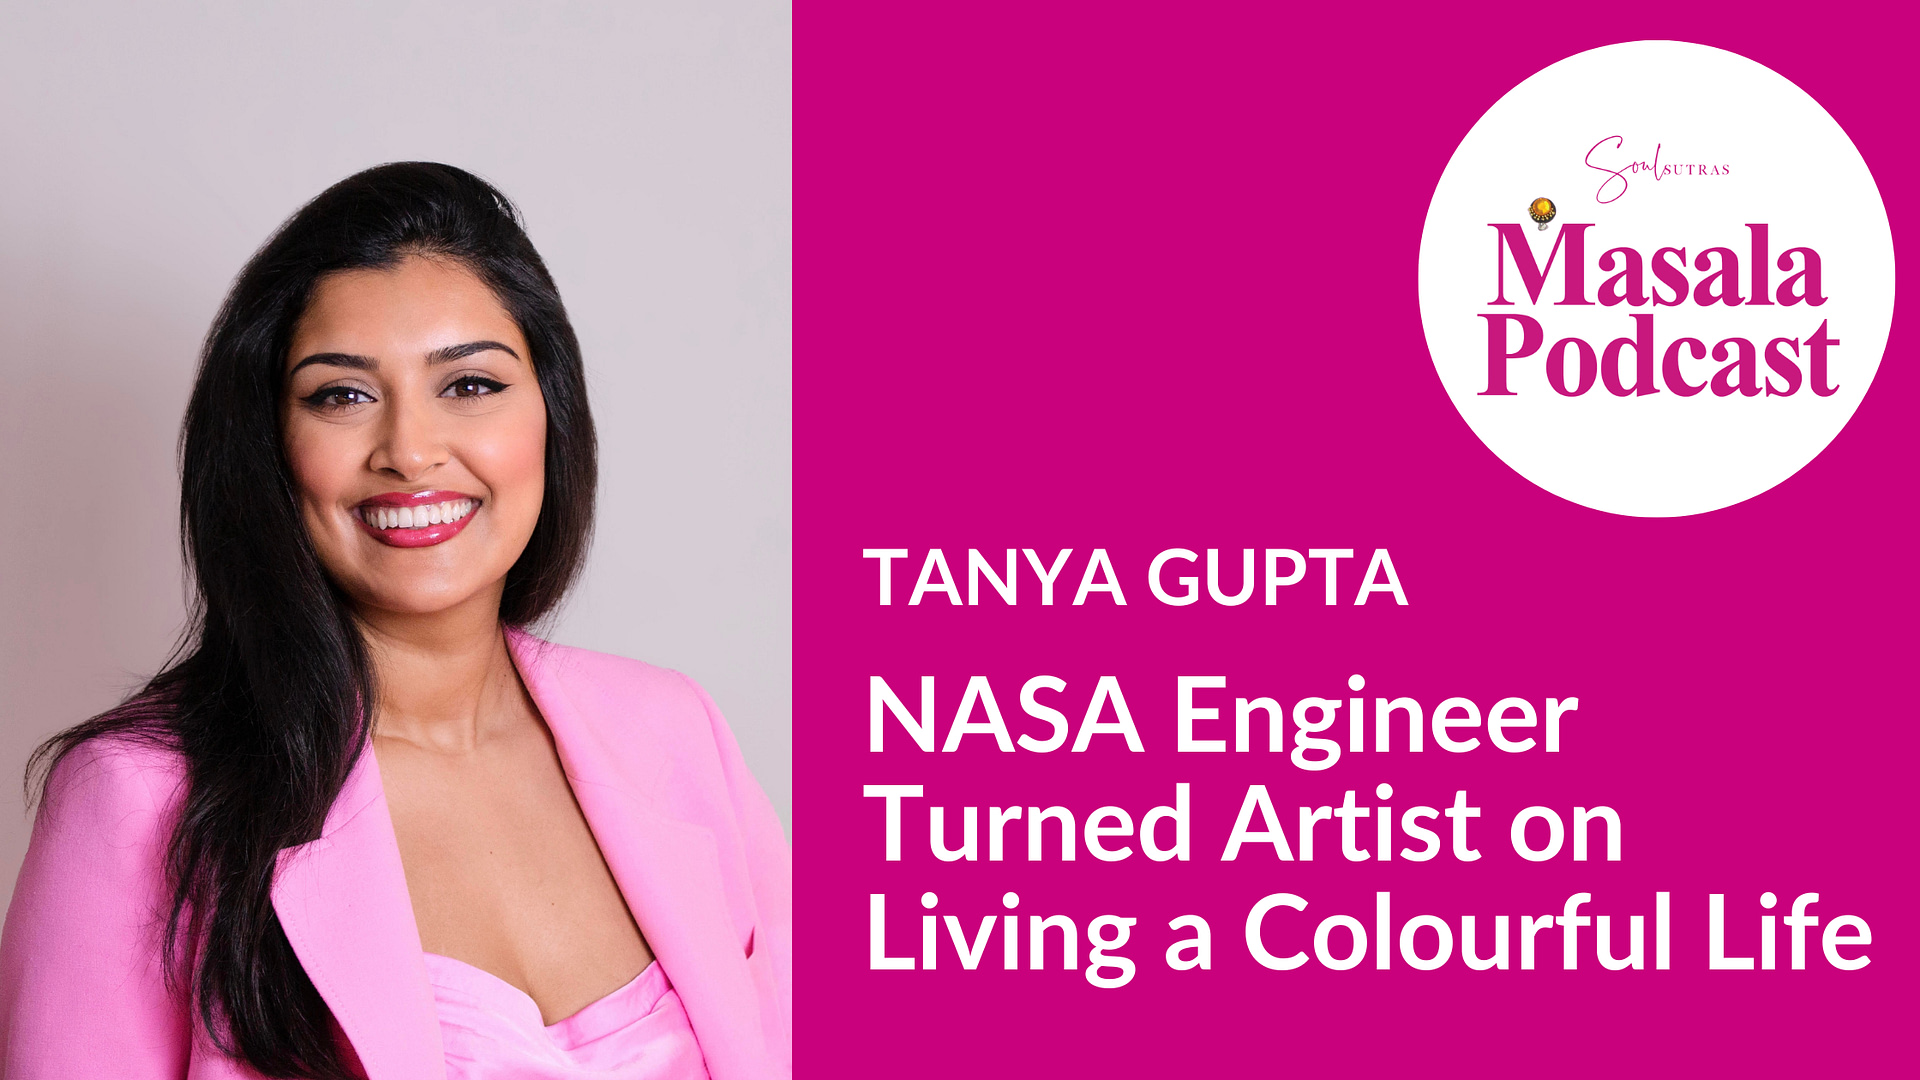 Tanya Gupa, NASA engineer turned artist, on Masala Podcast